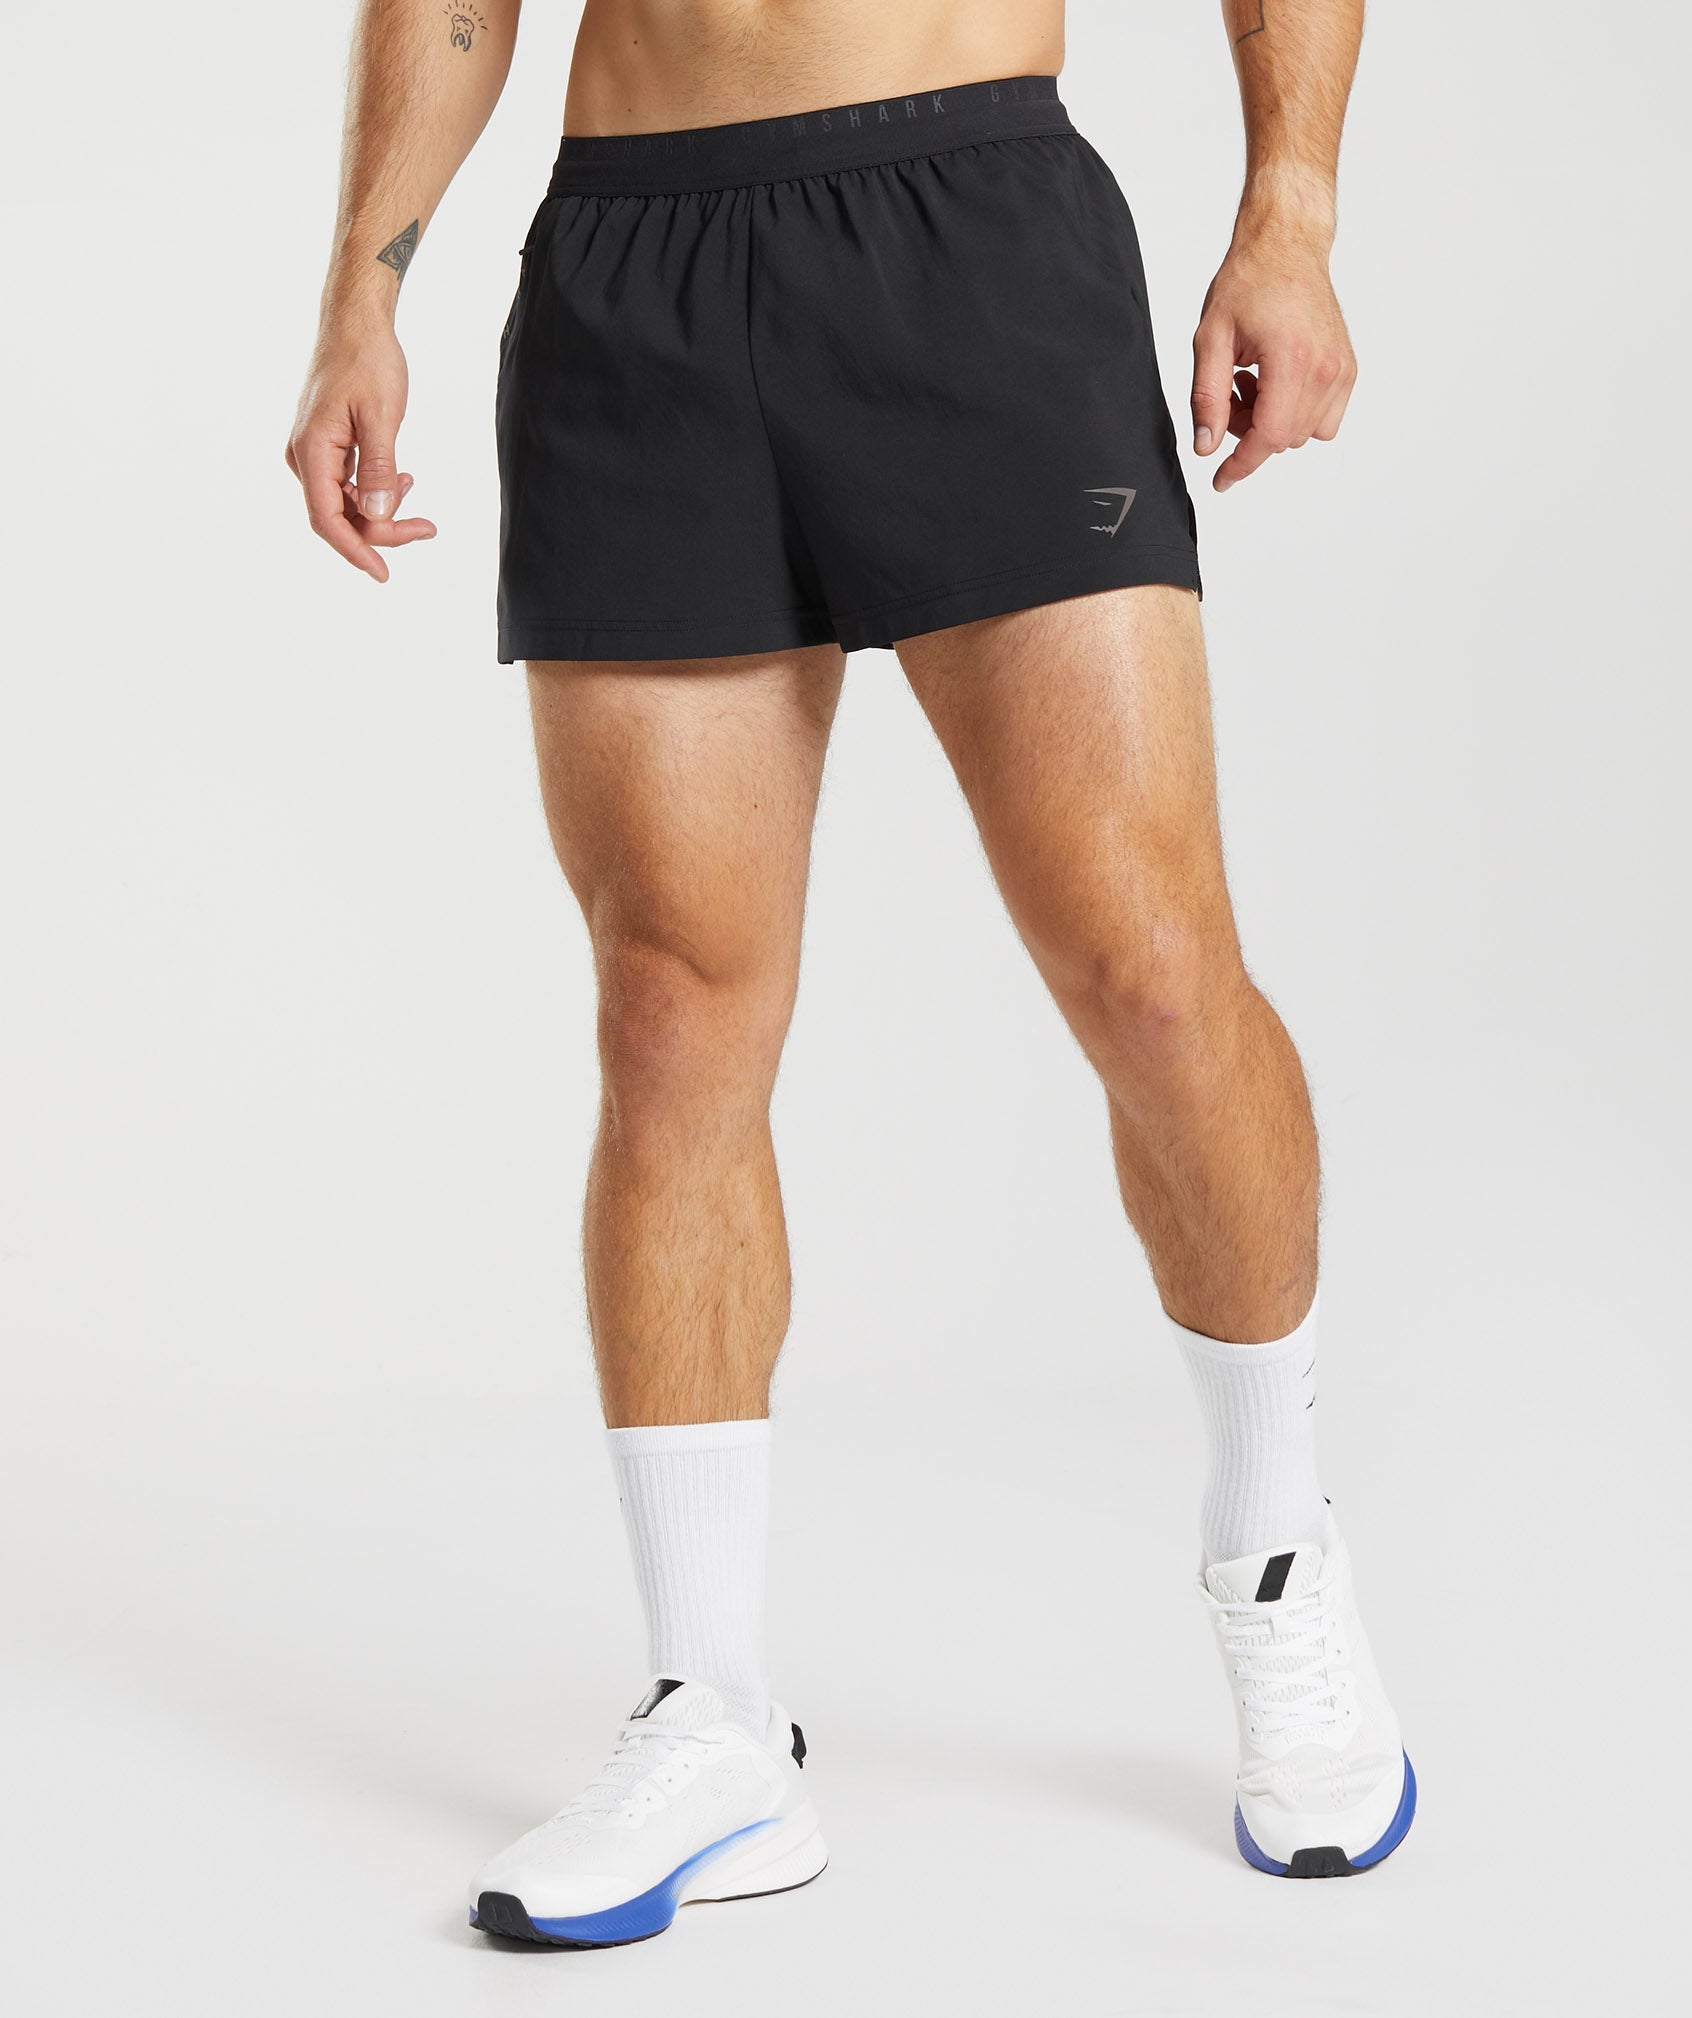 Buy The Run Shorts for men